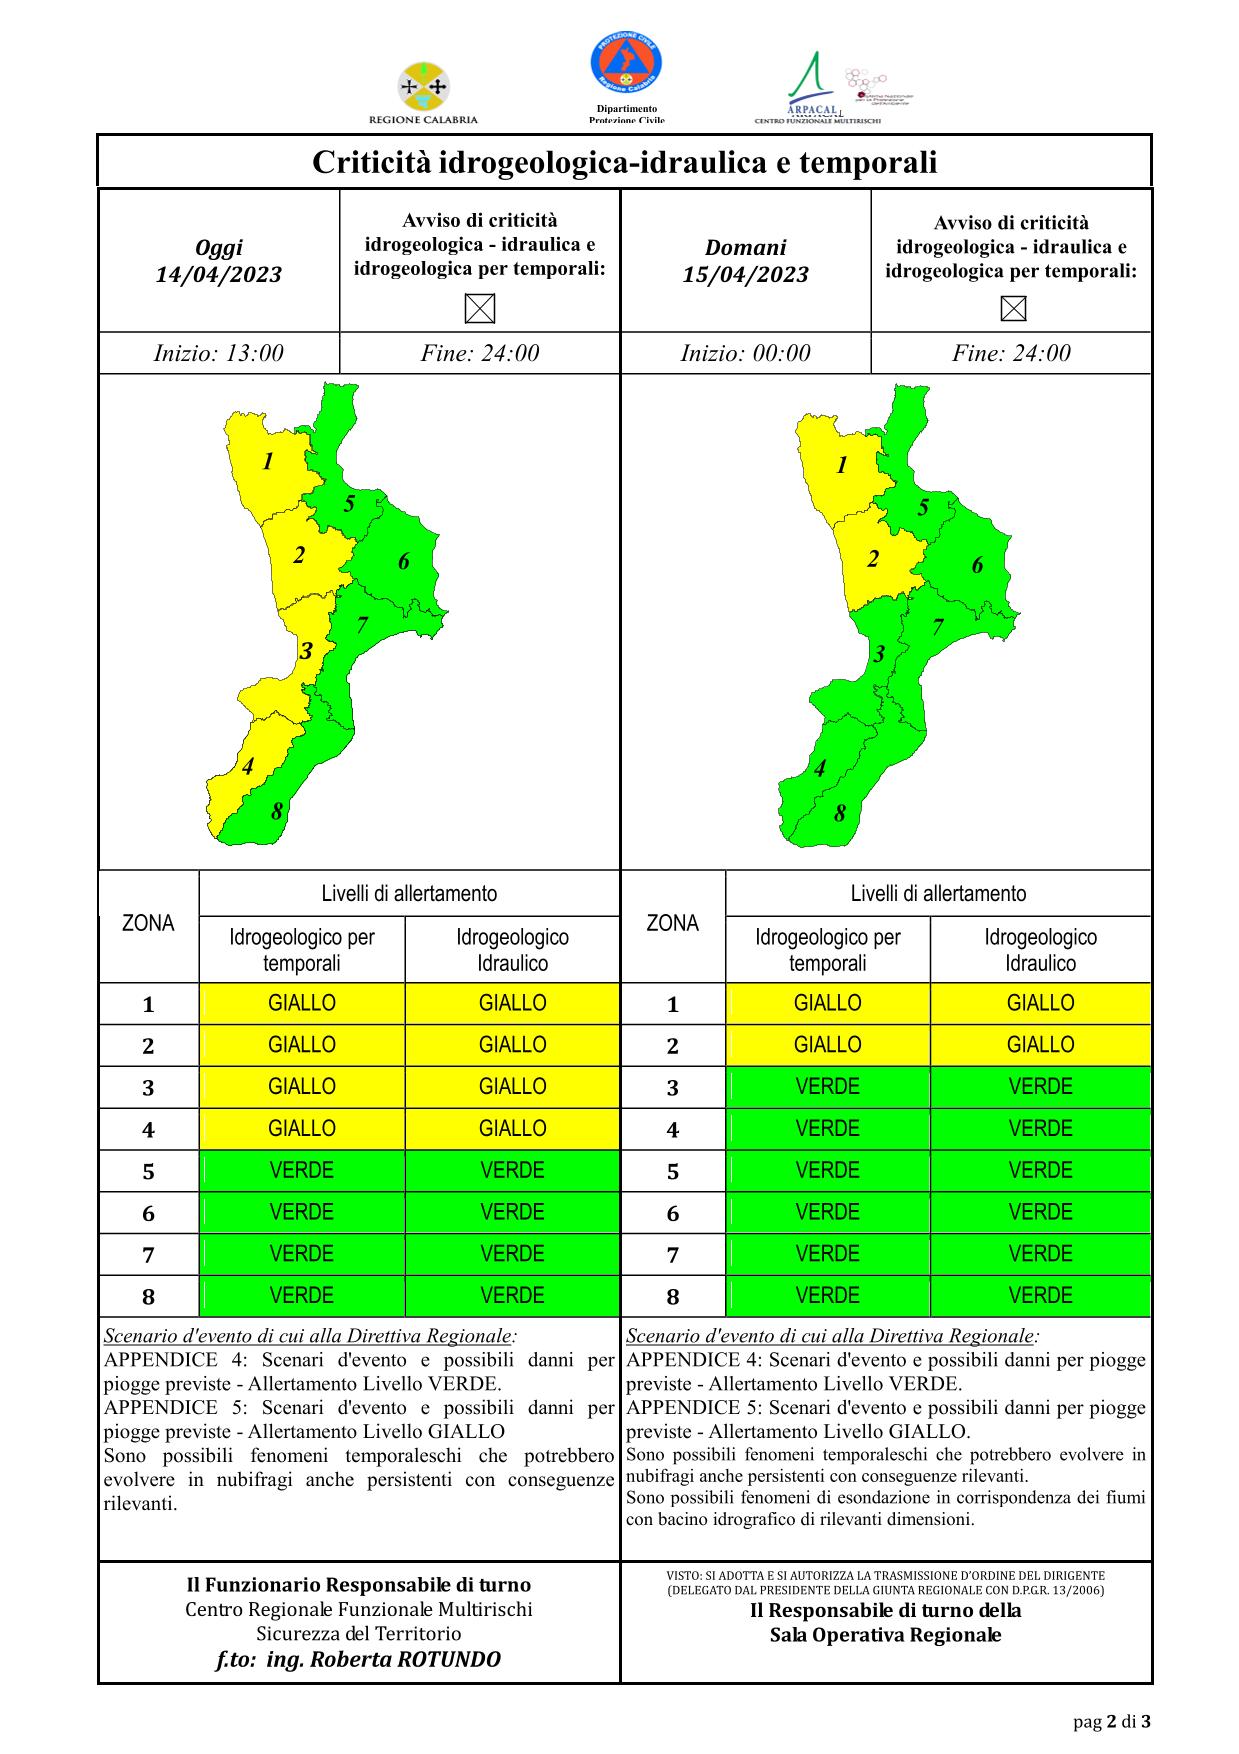 Criticità idrogeologica-idraulica e temporali in Calabria 14-04-2023